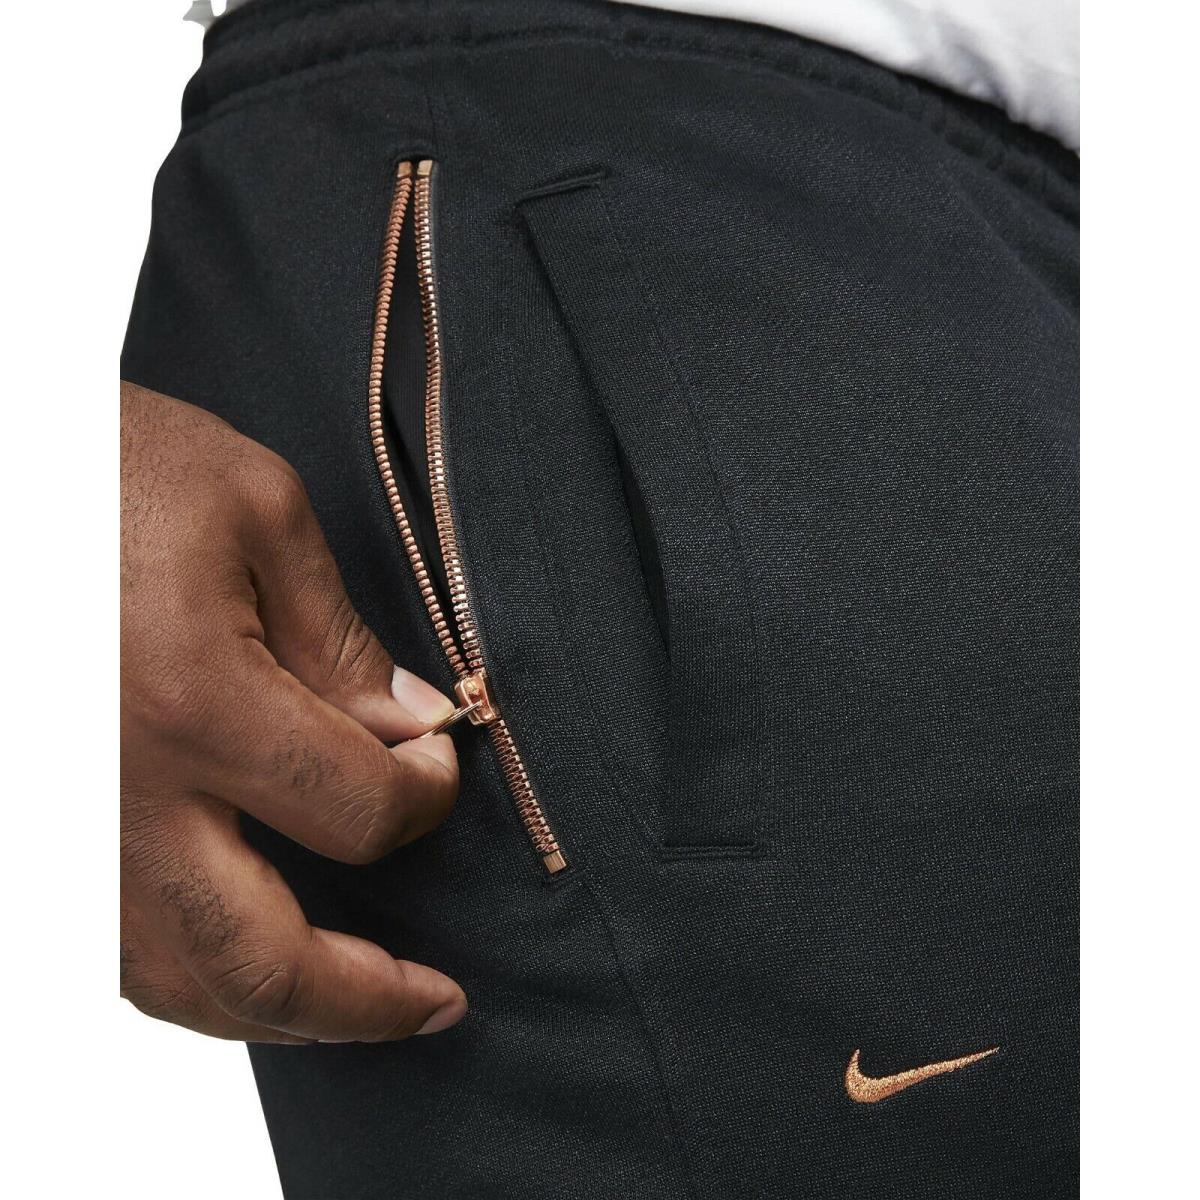 Nike clothing  - Black/Metallic Copper 3